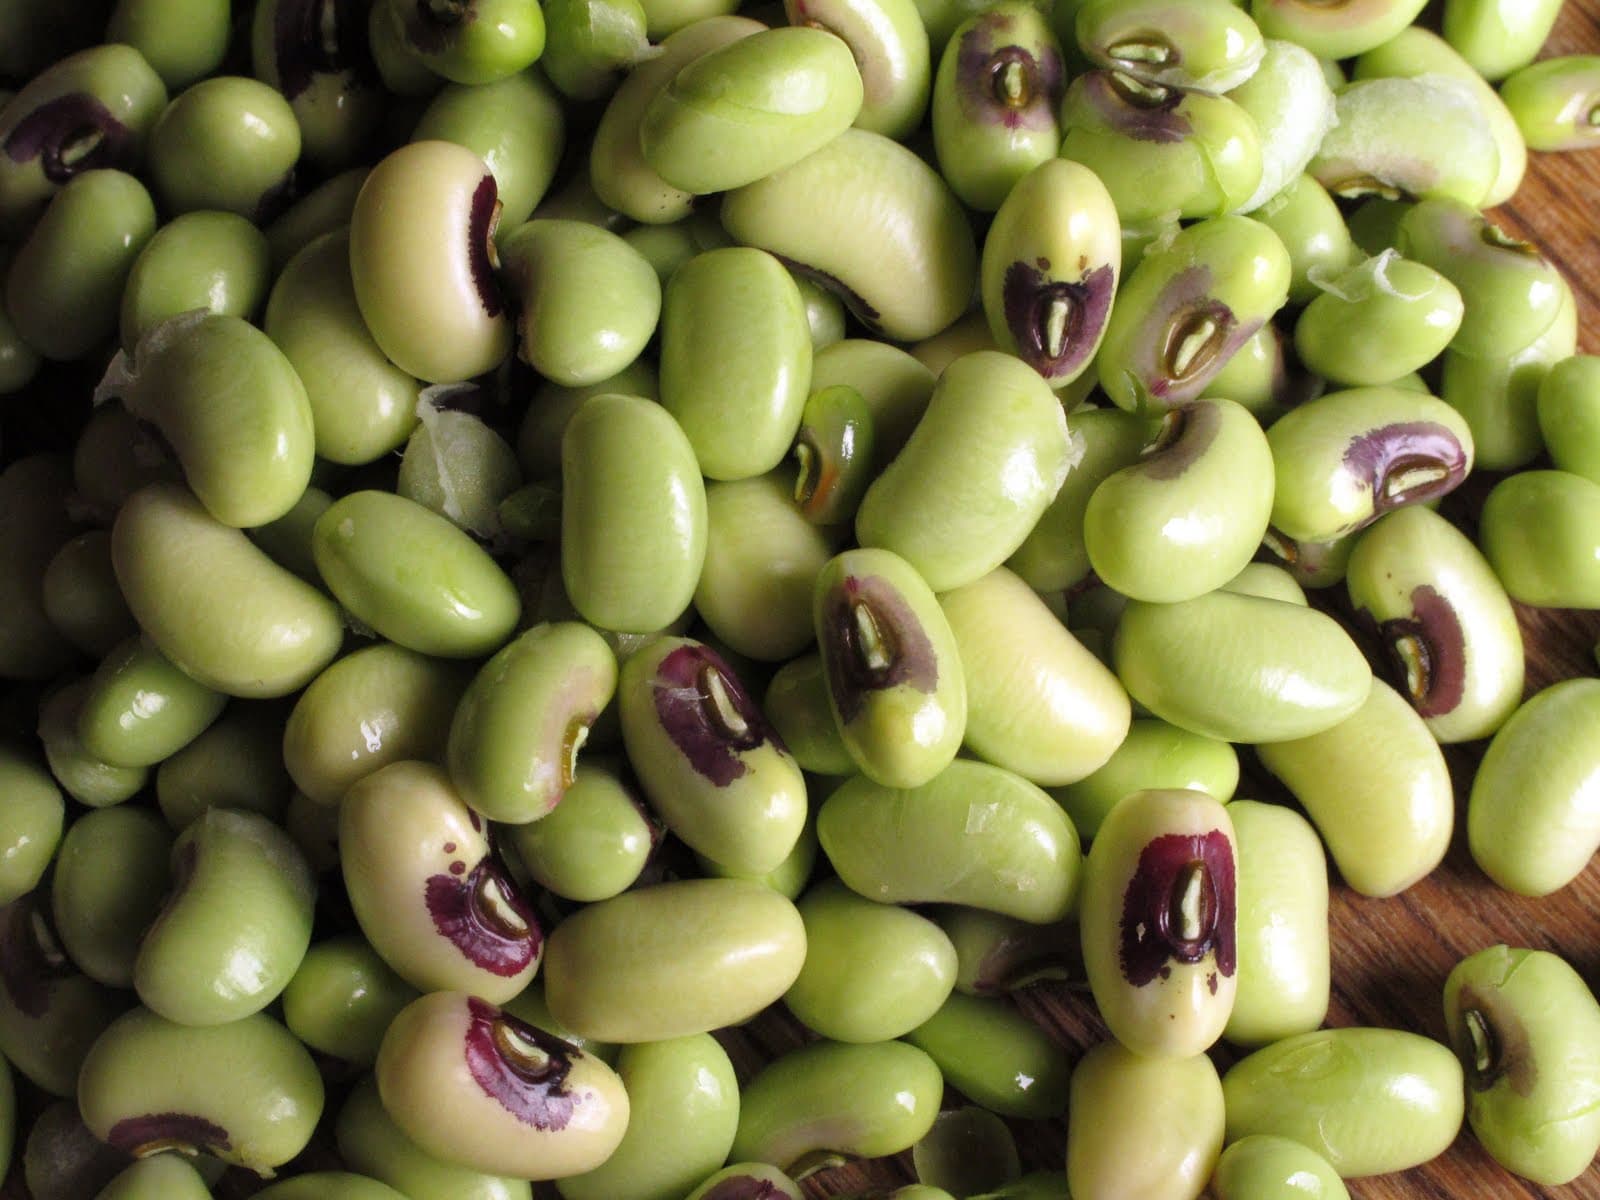 Fresh green peas lying on the table